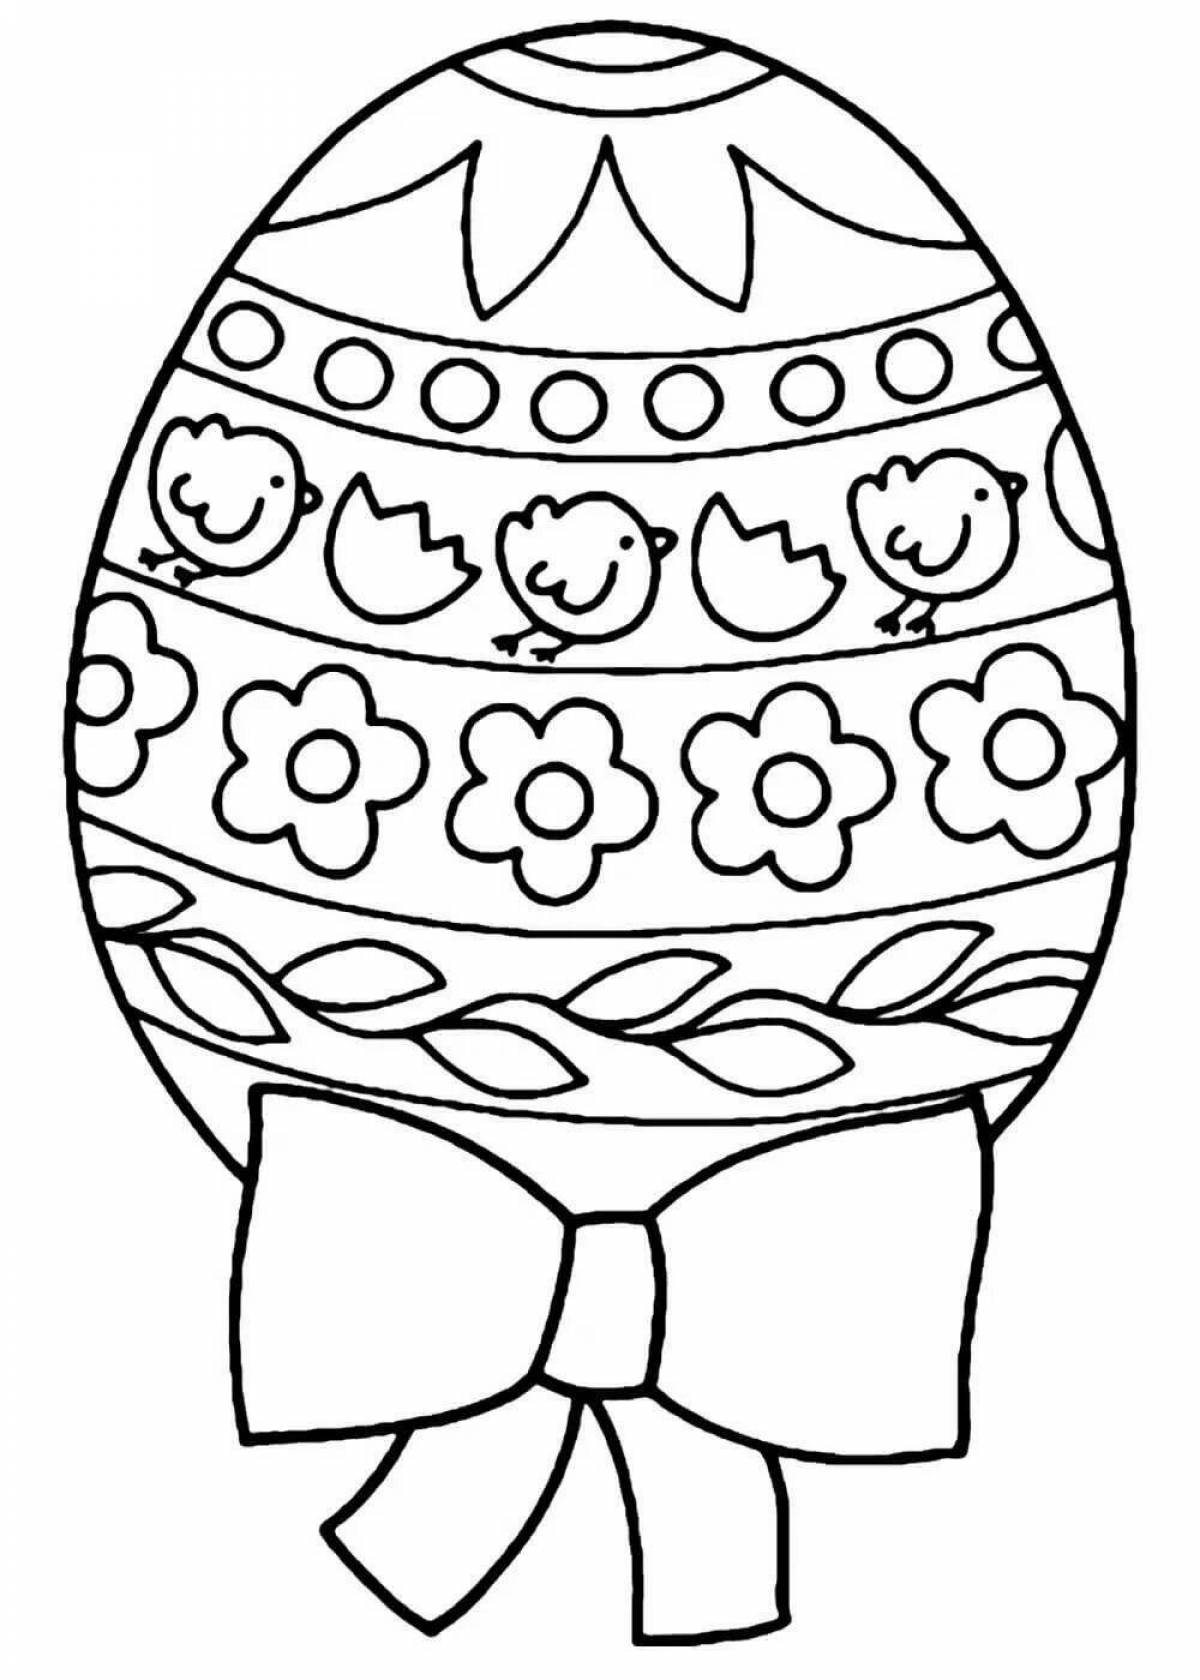 Fun testicle coloring page